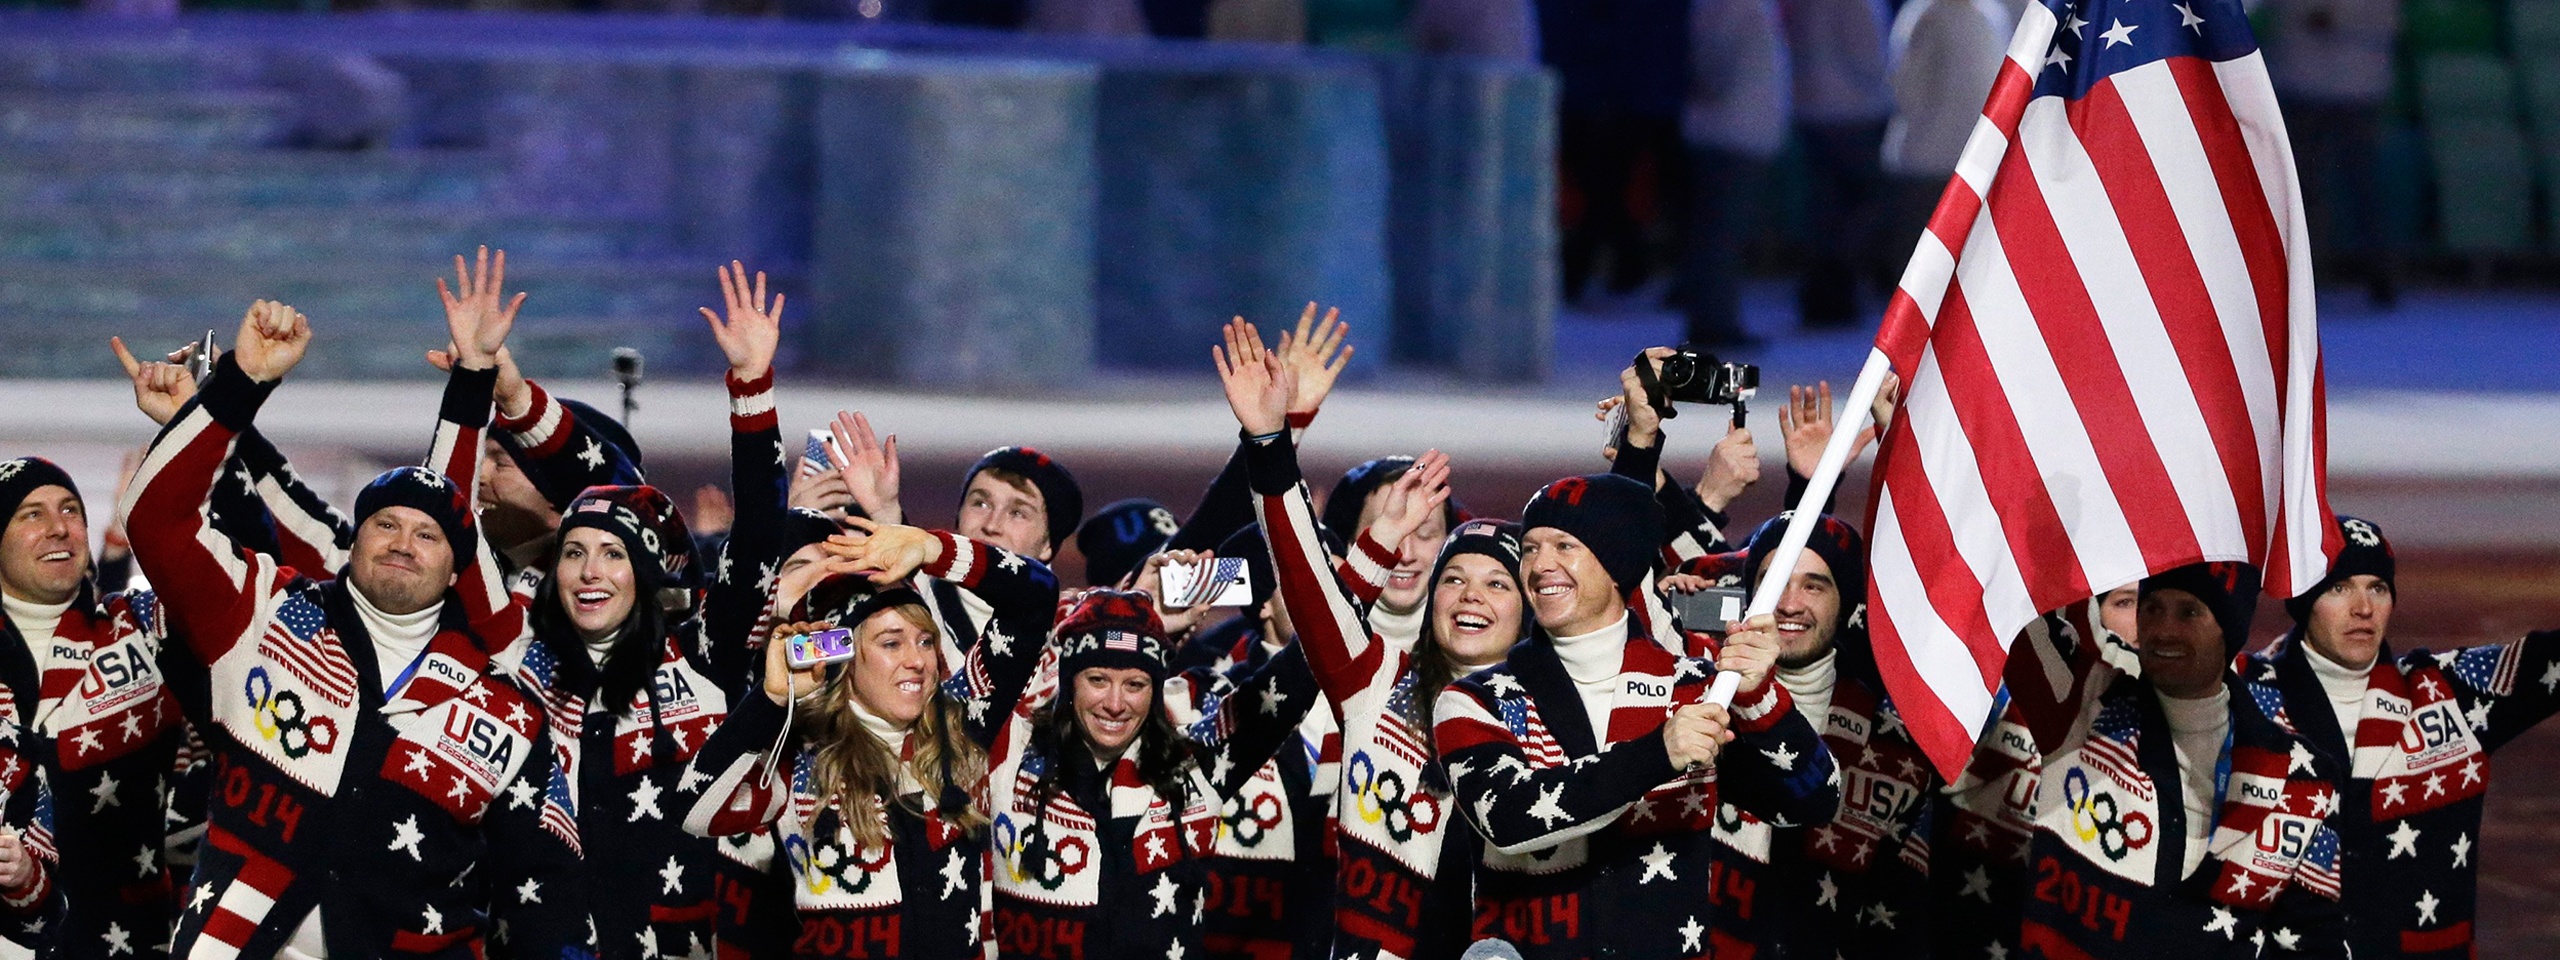 US Winter Olympic Team - Sochi 2014